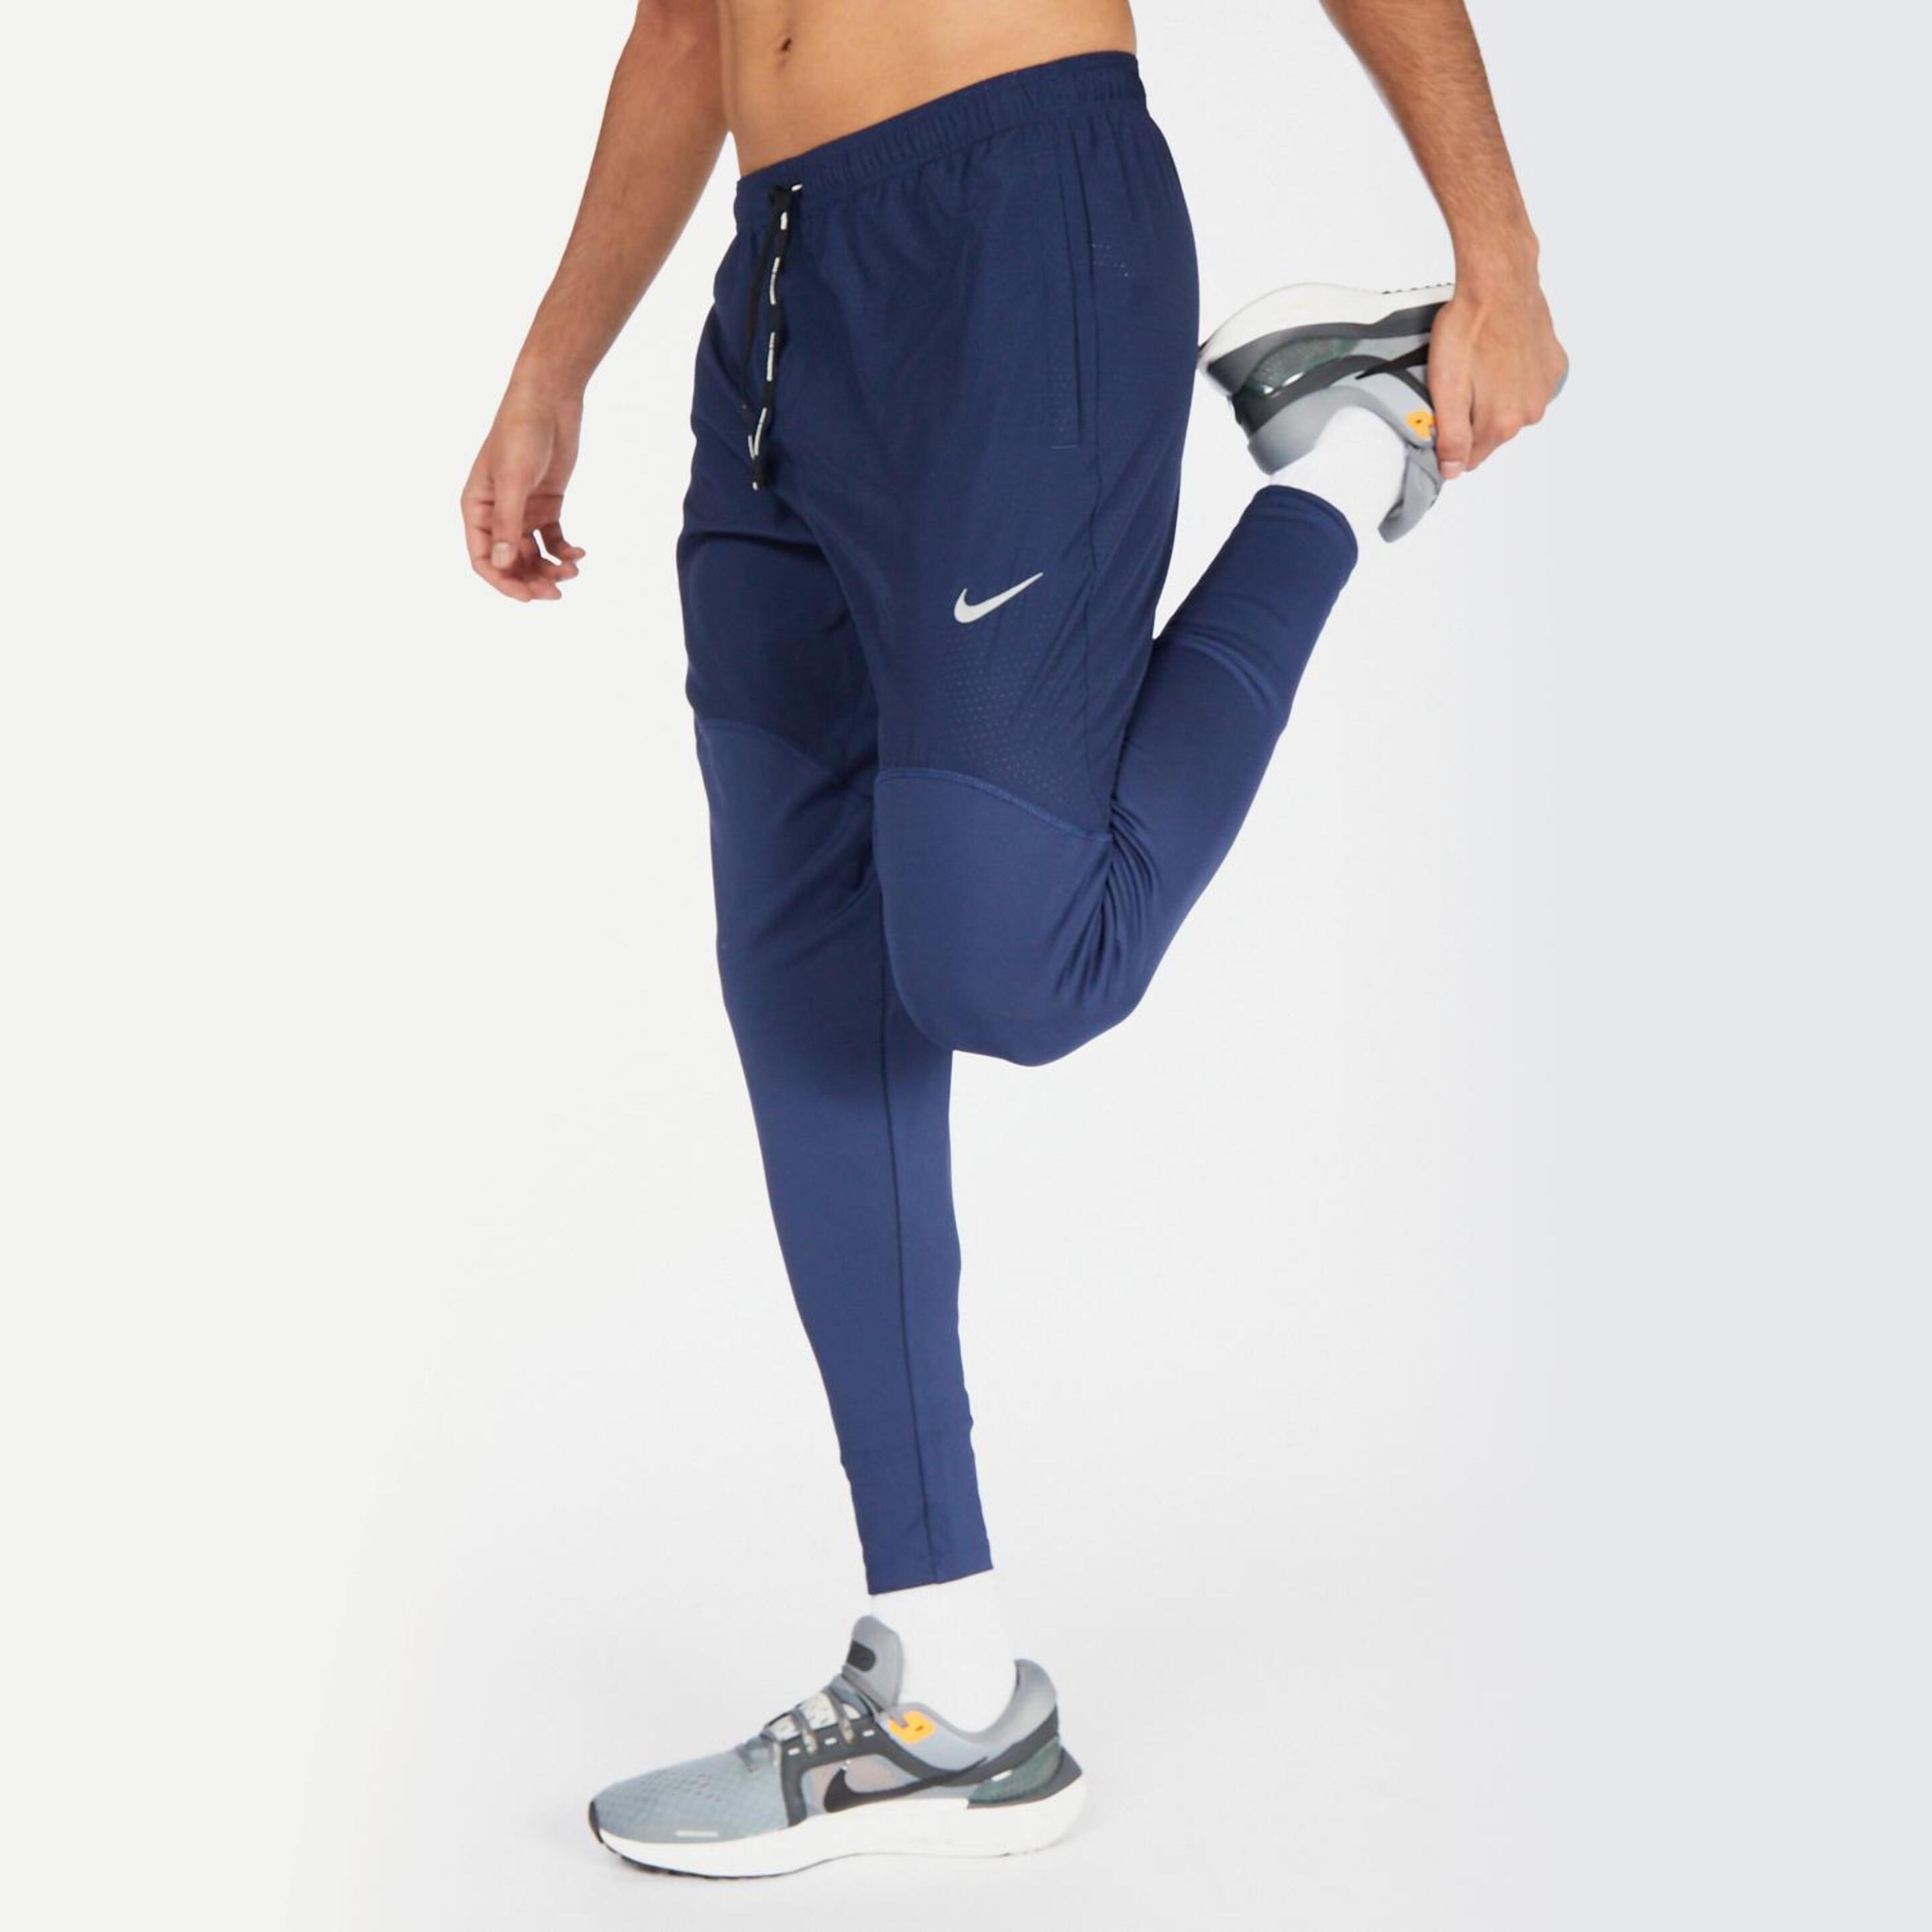 Legging Running Nike